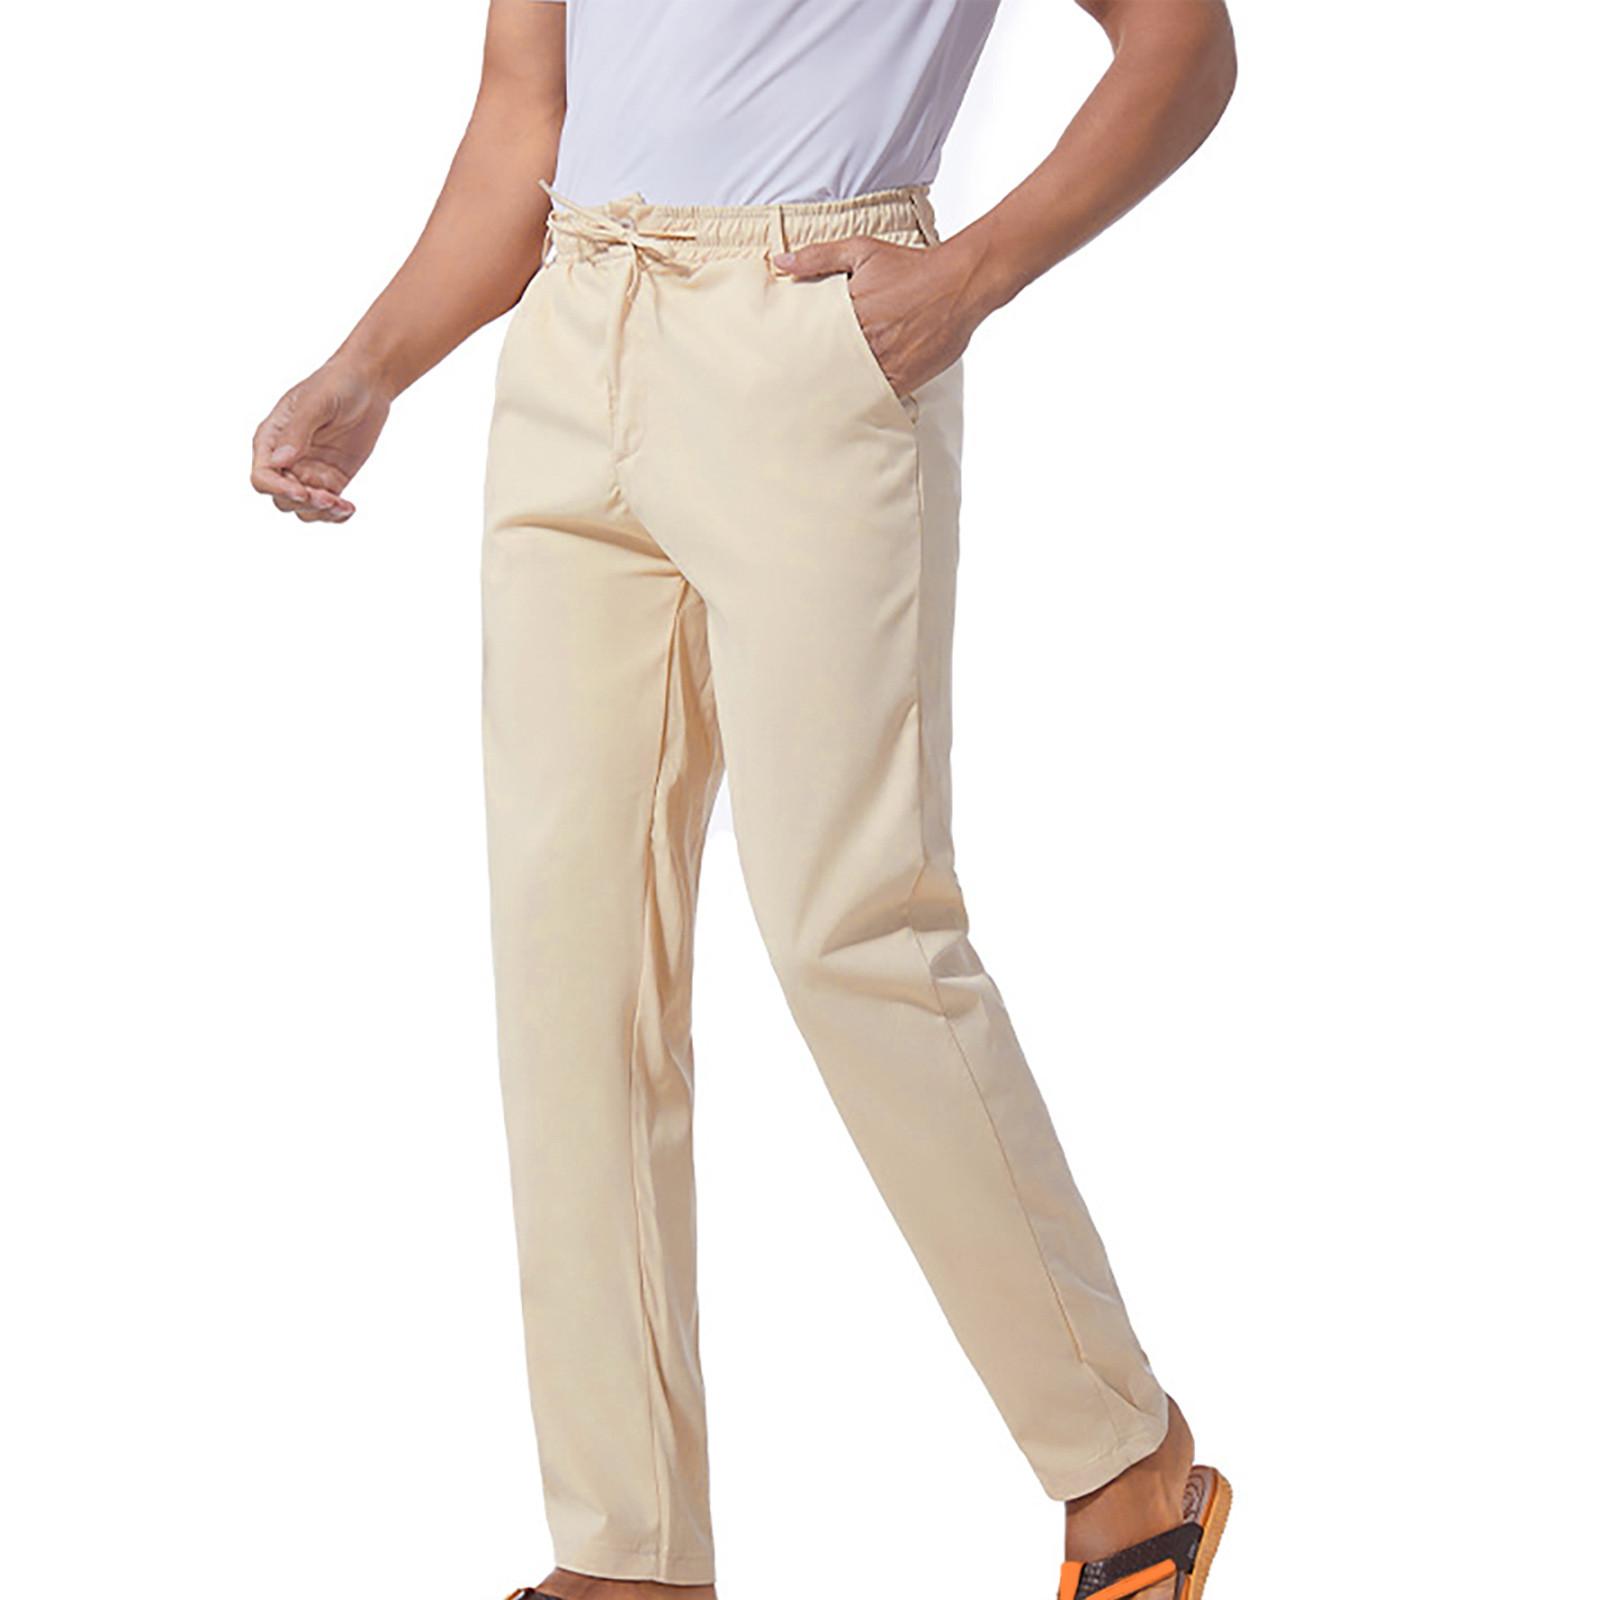 Tdoqot Chinos Pants Men- Cotton Drawstring Comftable Elastic Waist Slim Casual Mens Pants Beige - image 1 of 6